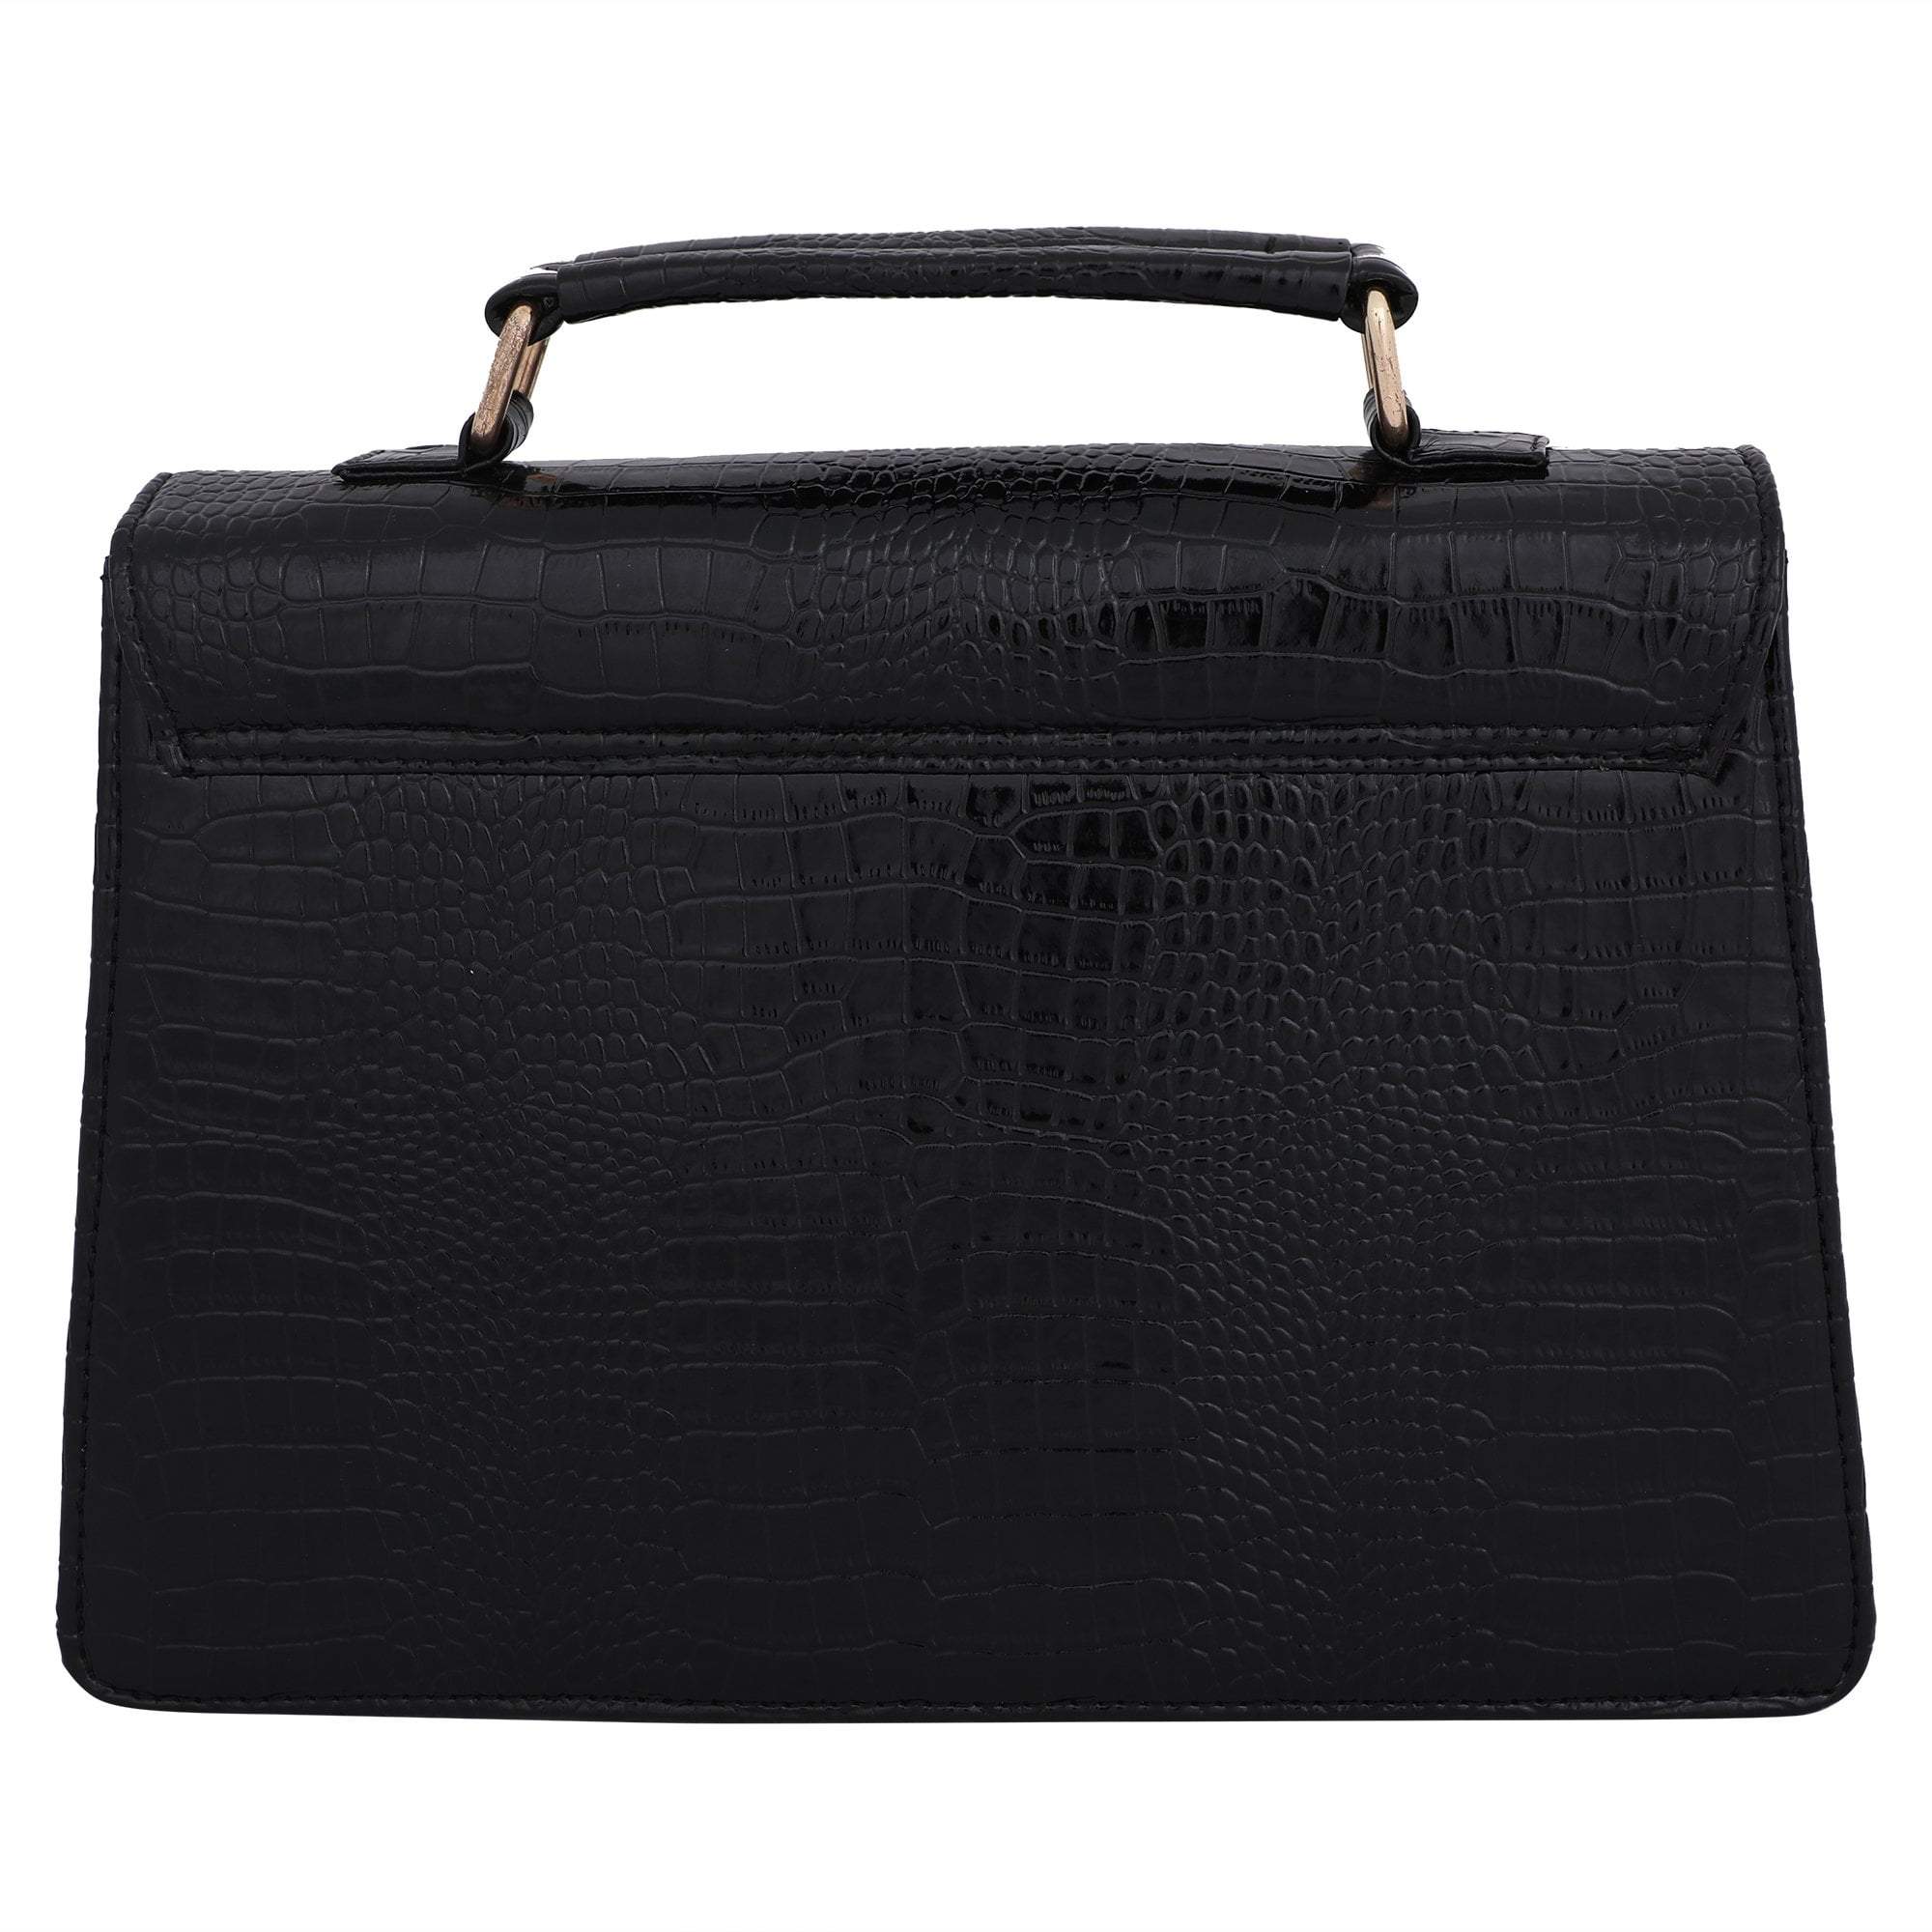 kinnoti Handbags Vegan Croco Leather Satchel Hand Bag